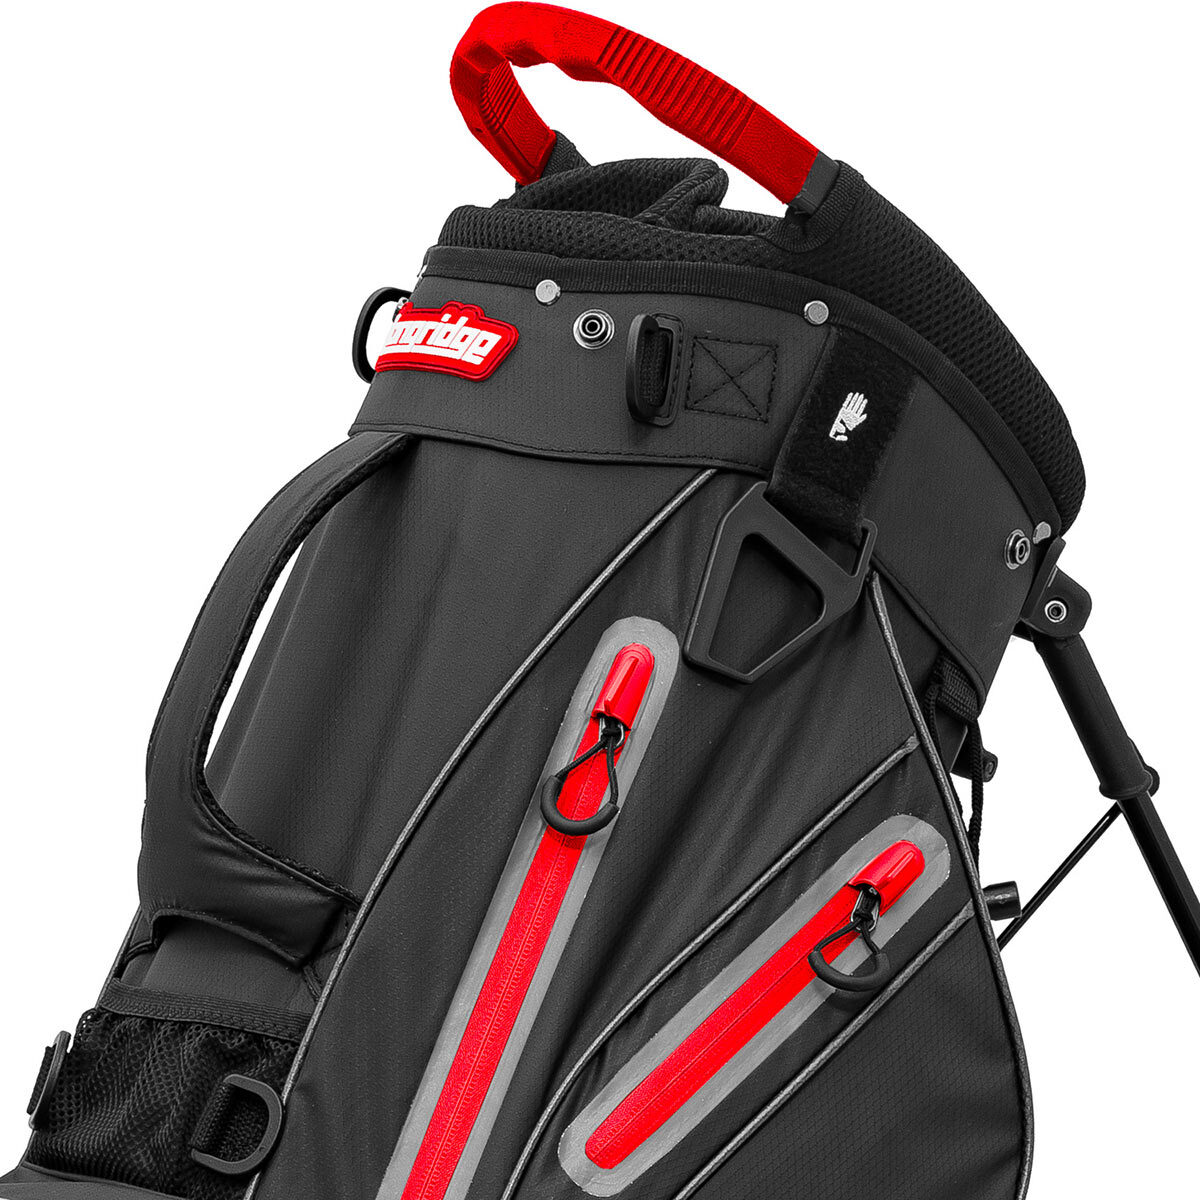 Longridge Elements Waterproof Stand Bag in Black and Red